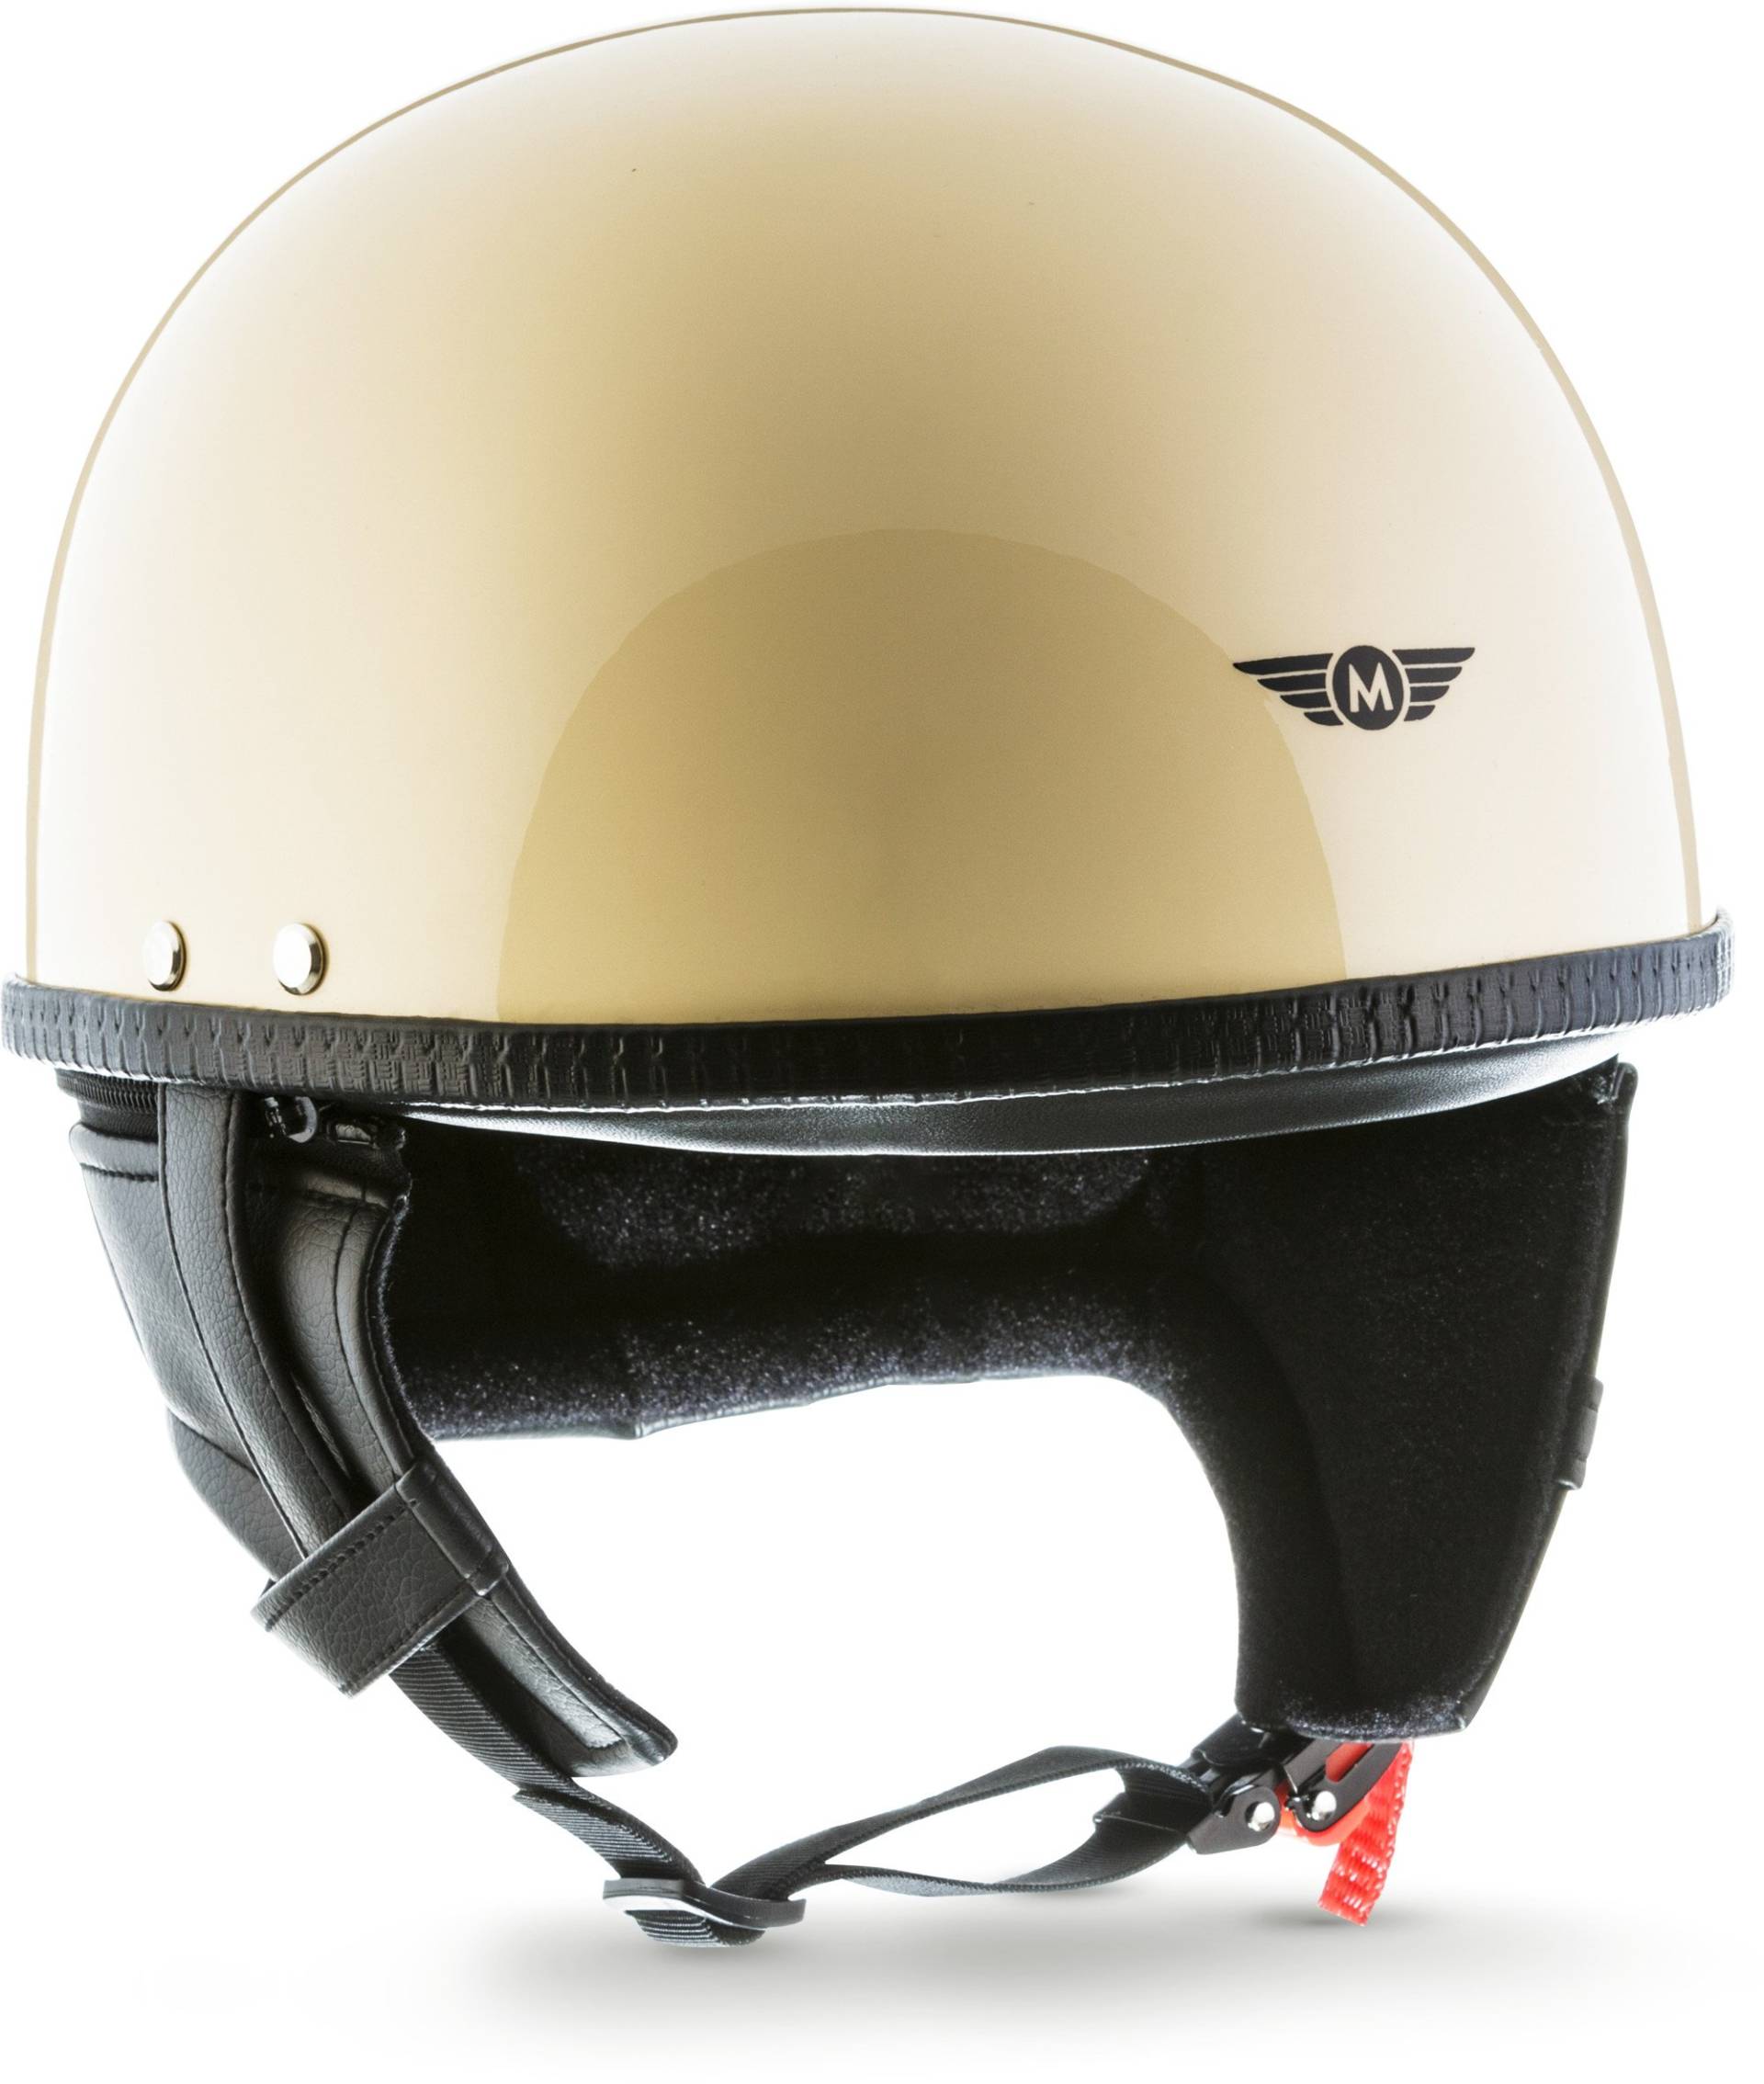 Moto Helmets® D22 „Creme“ · Brain-Cap · Halbschale Jet-Helm Motorrad-Helm Roller-Helm Retro · Fiberglas Schnellverschluss SlimShell Tasche M (57-58cm) von Moto Helmets